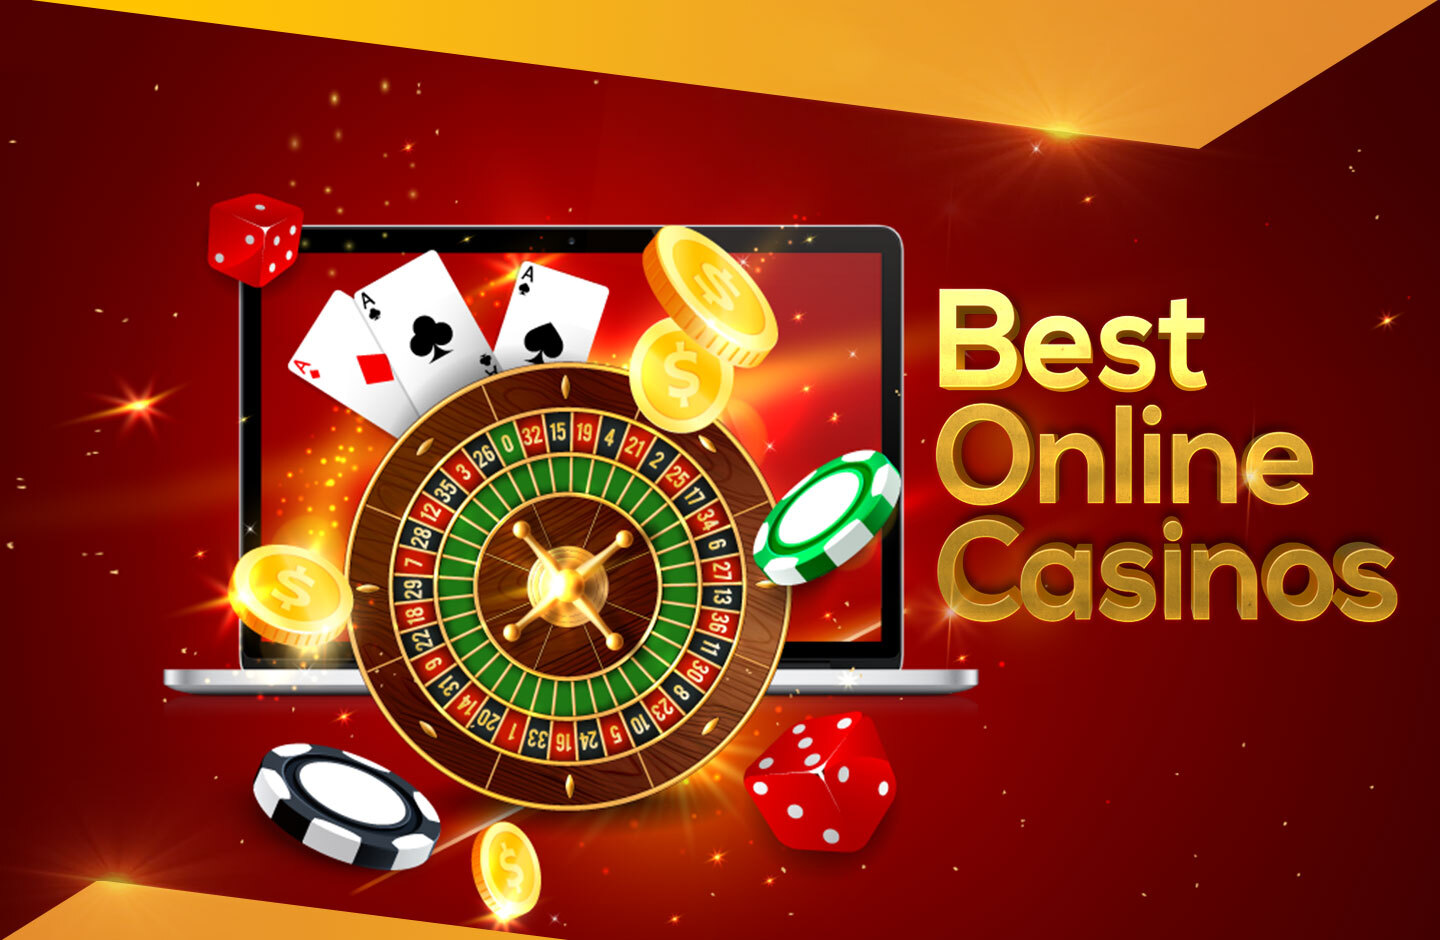 Slot Machine Gambling Online The Modern Gambler's Playground